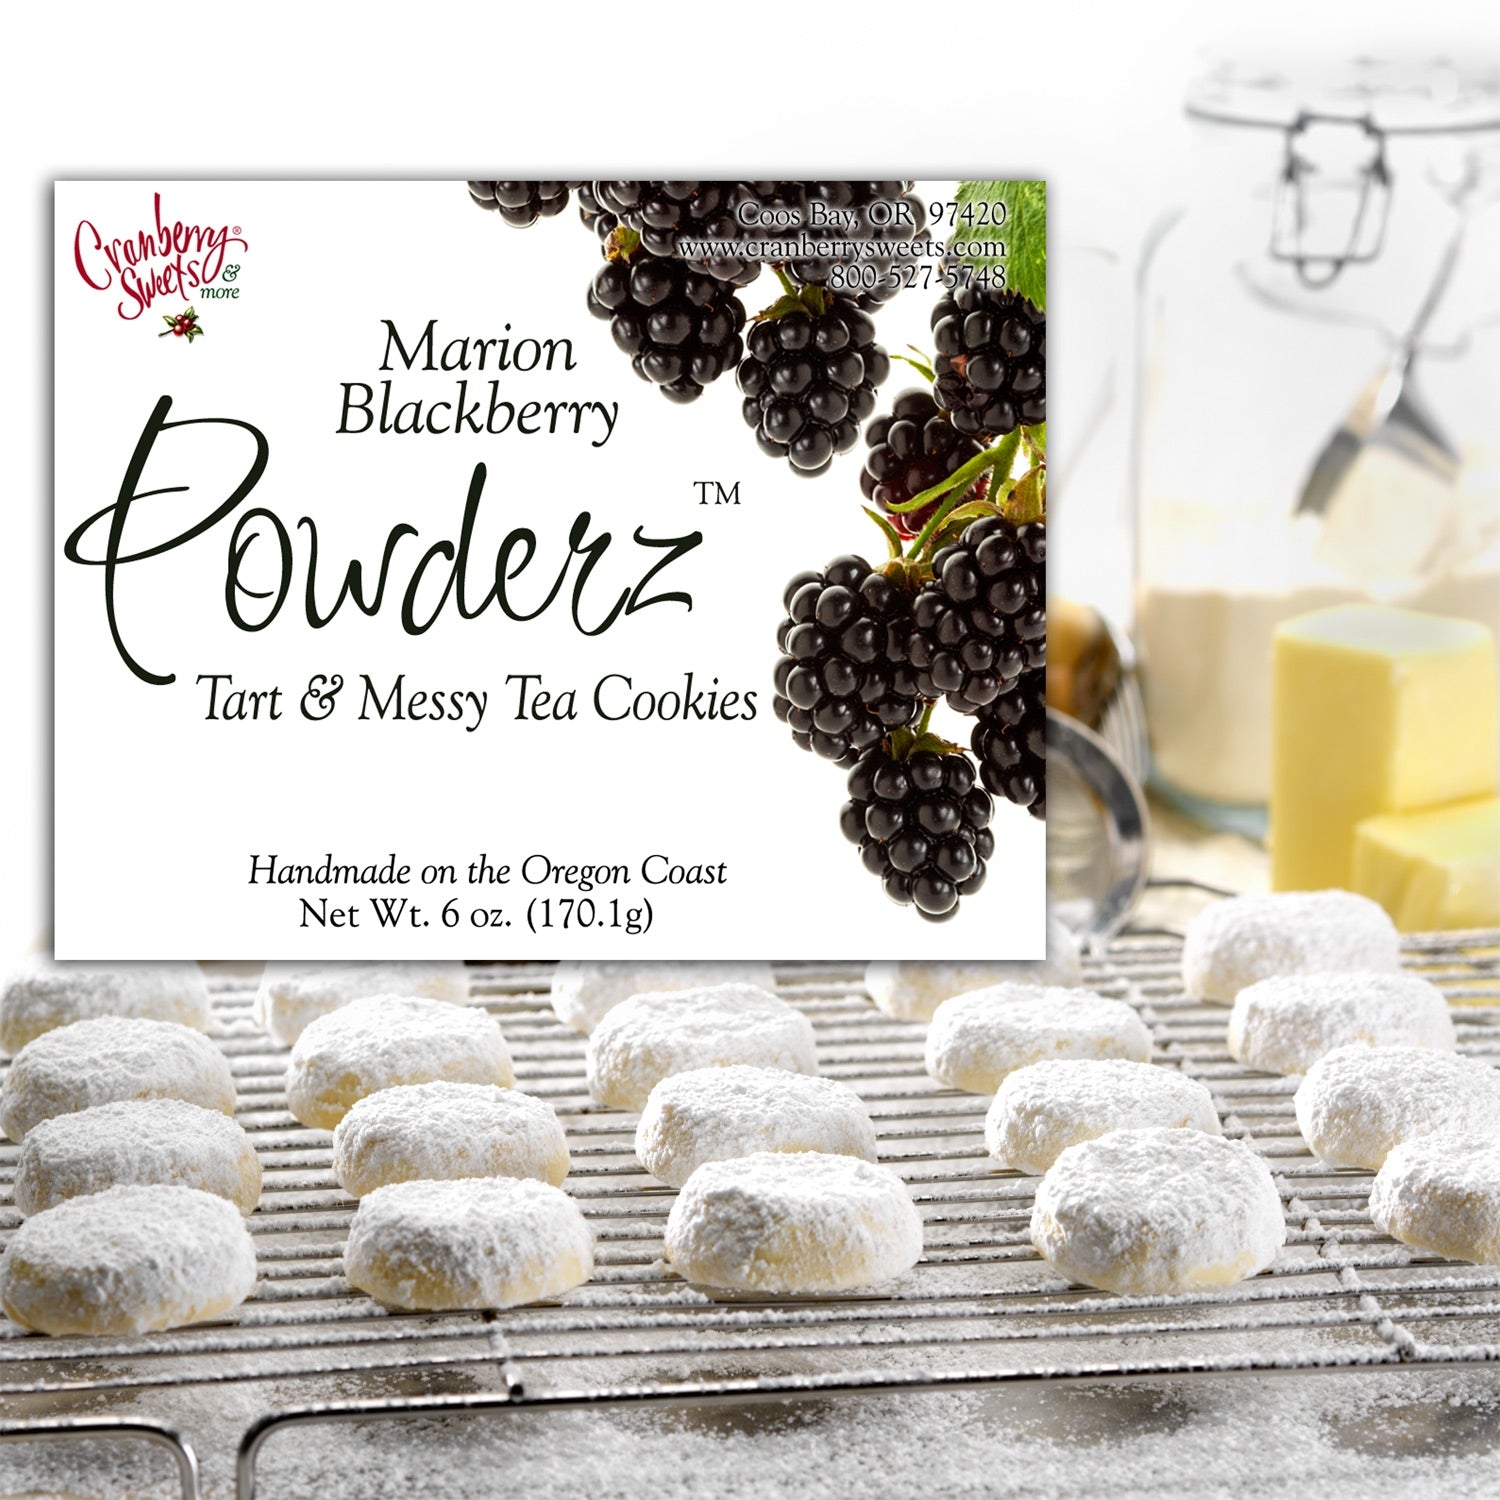 Powderz Marion Blackberry Tea Cookies 6oz.